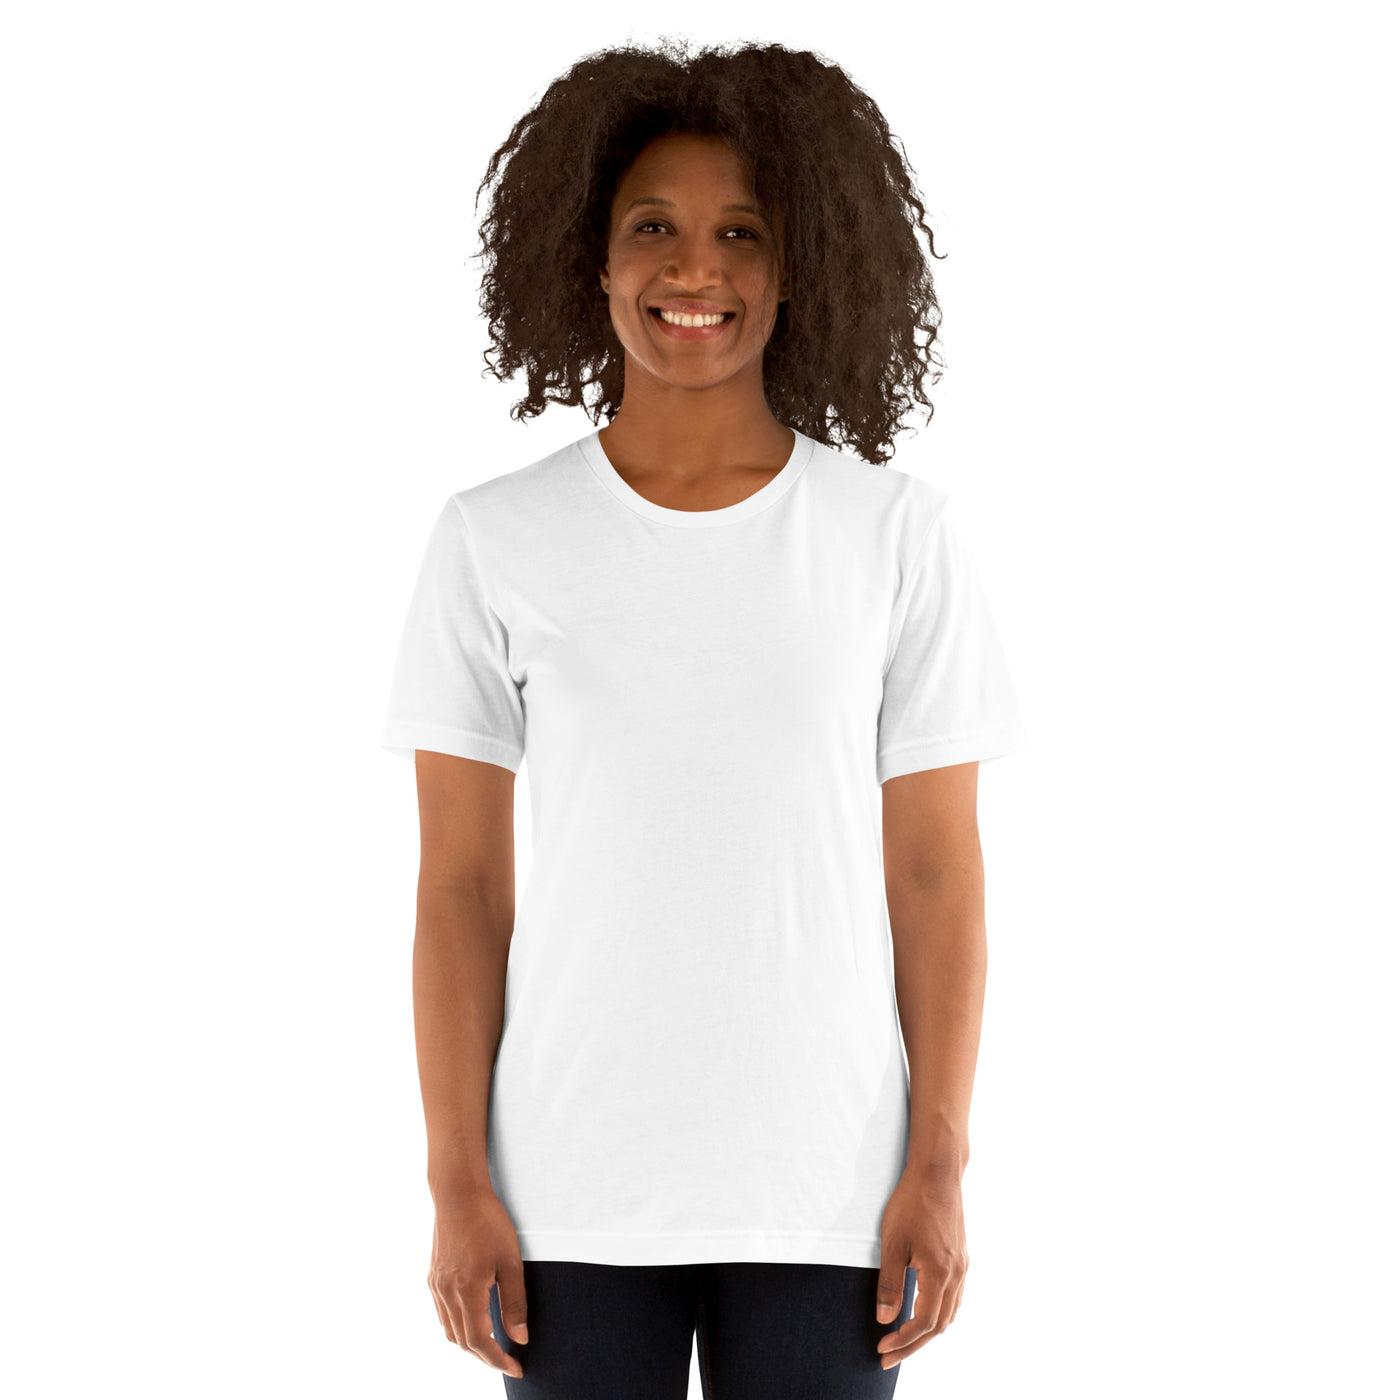 Root Shell - Unisex t-shirt ( Back Print )